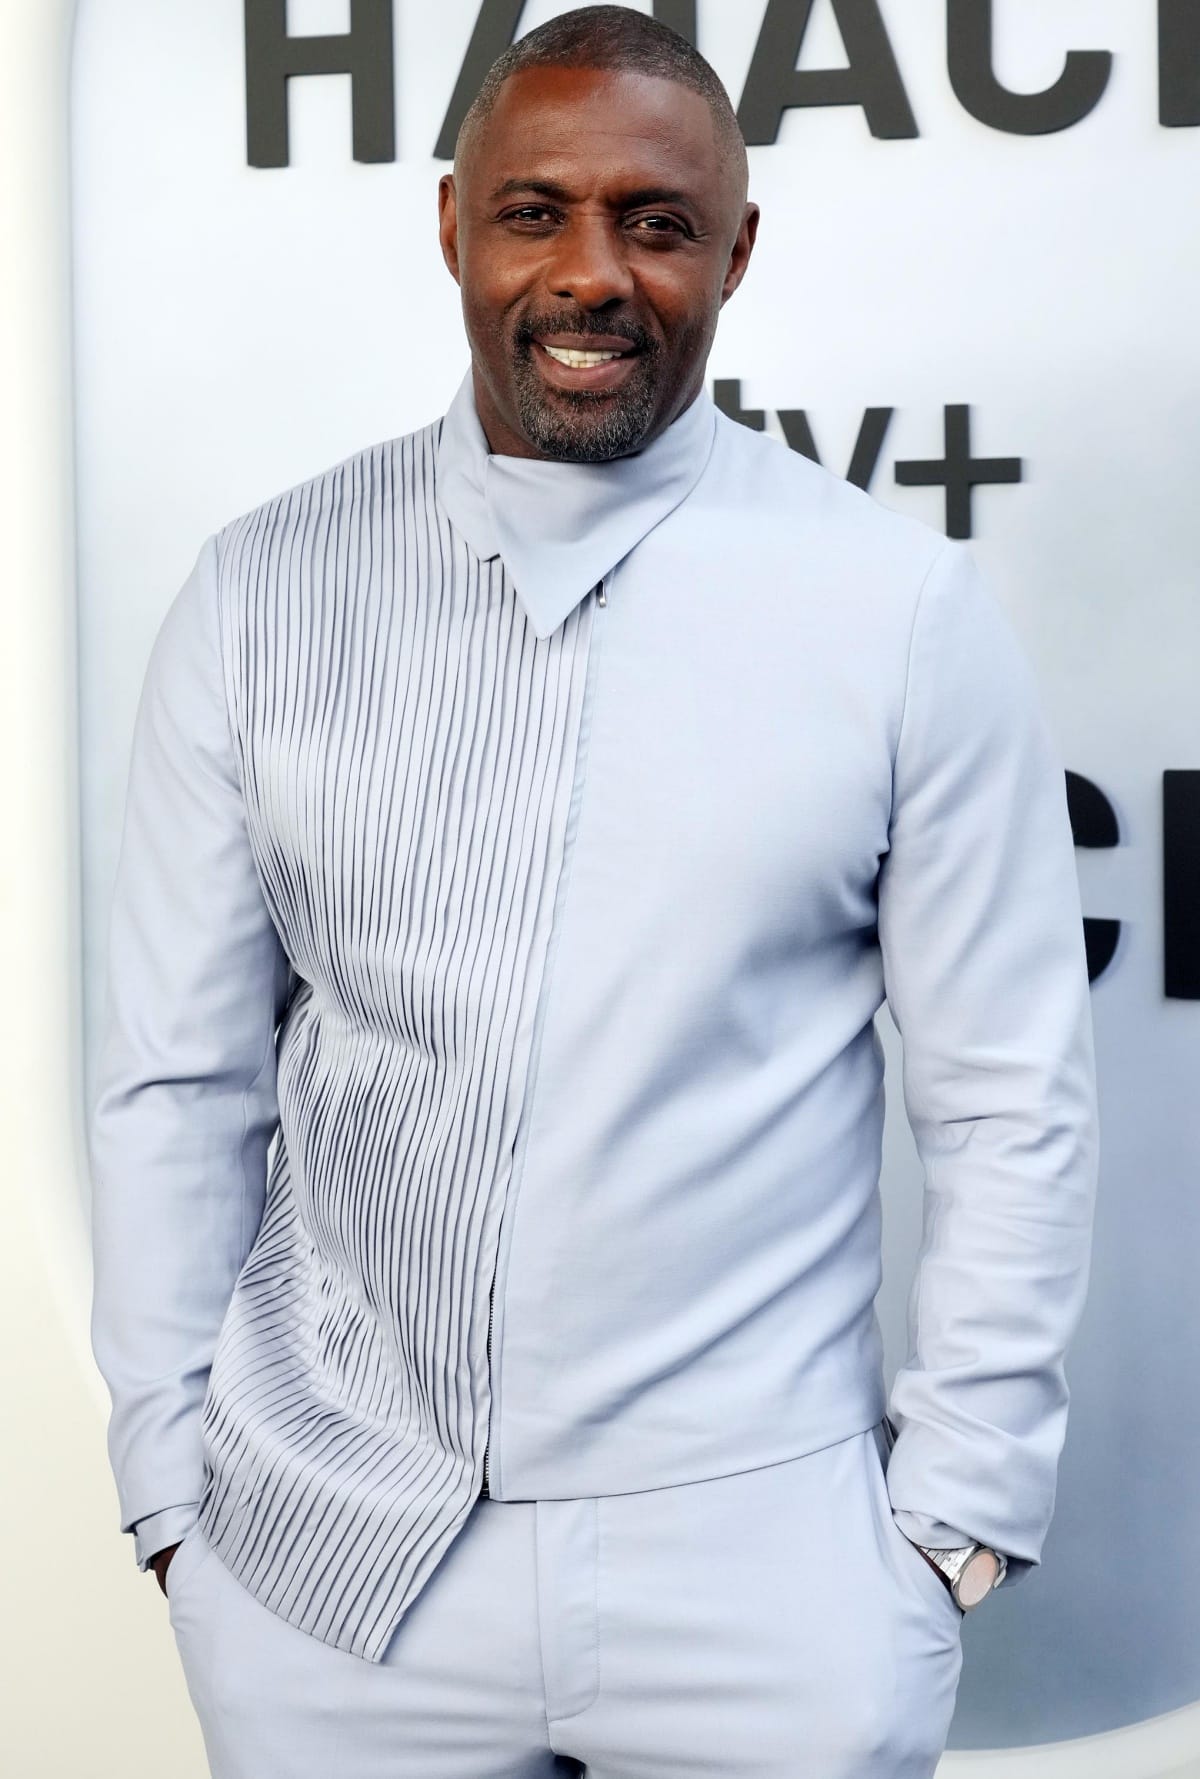 Idris Elba's Height: How He Met His 3rd Wife Sabrina Dhowre